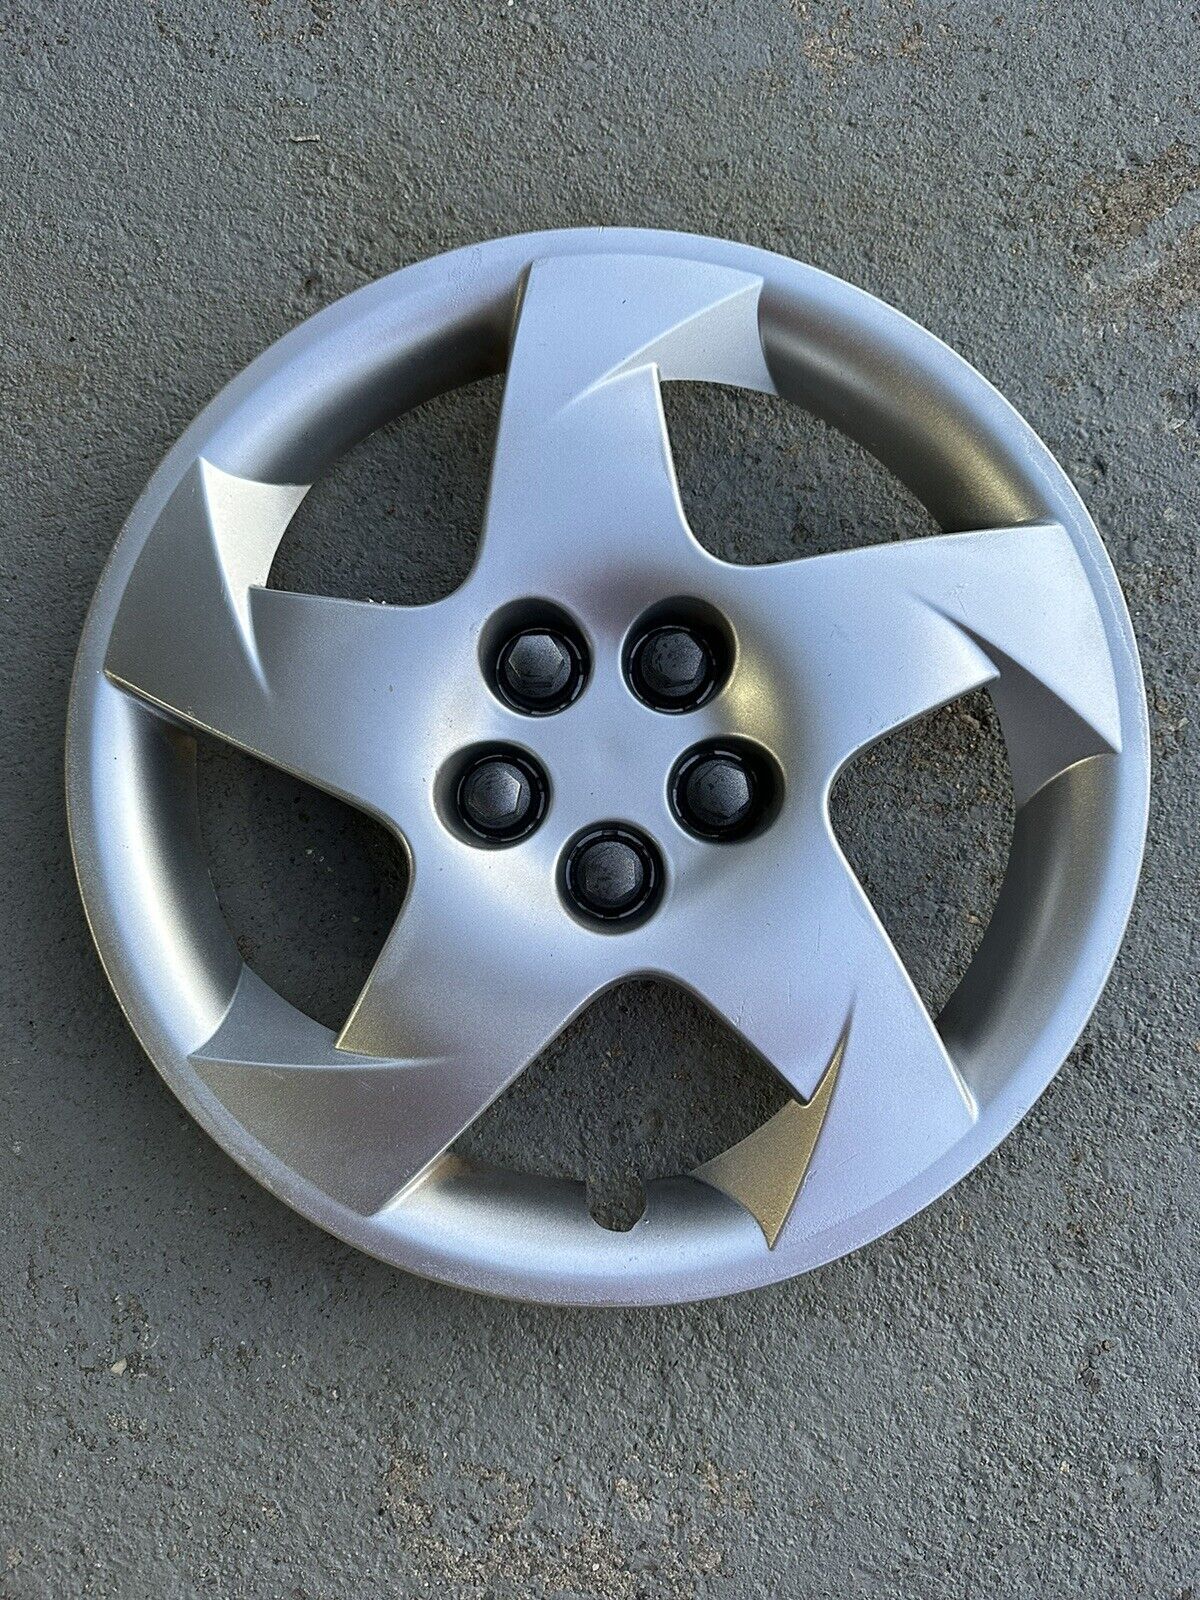 03-10 Pontiac Vibe 16” Hubcap Wheel Cover   22676857 05 06 07 08 09